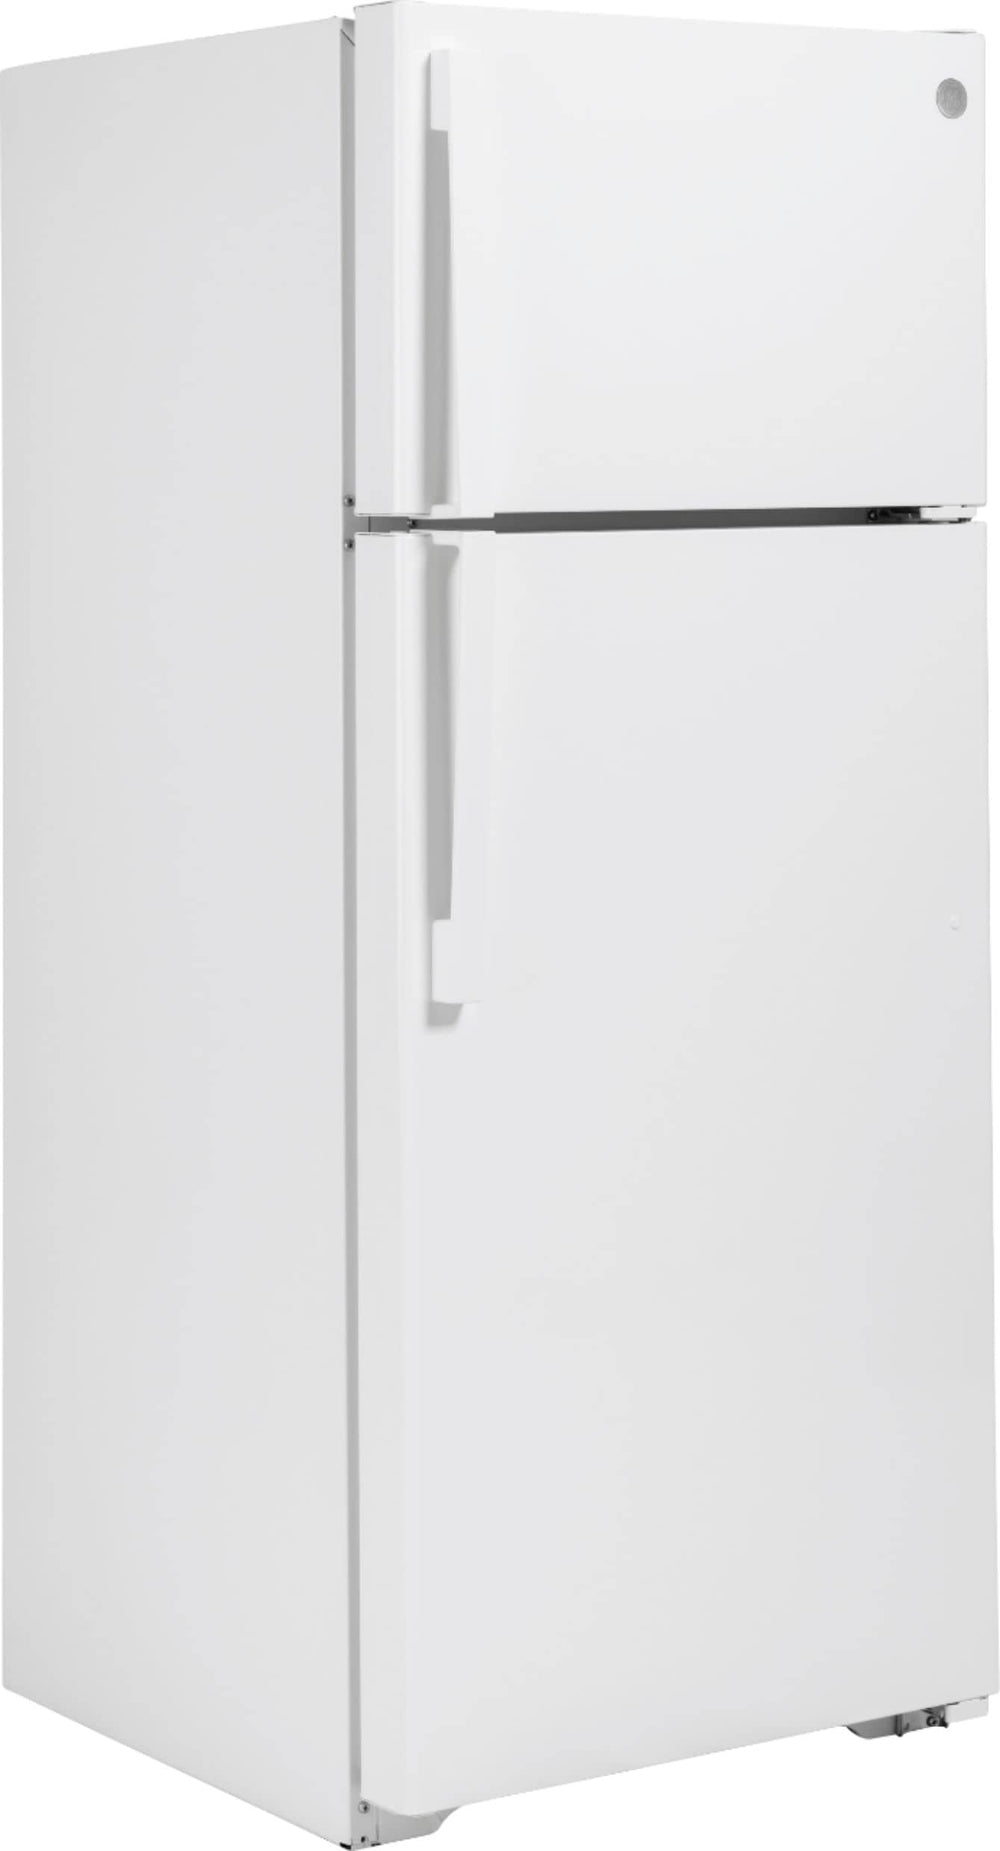 GE - 17.5 Cu. Ft. Top-Freezer Refrigerator - White_1